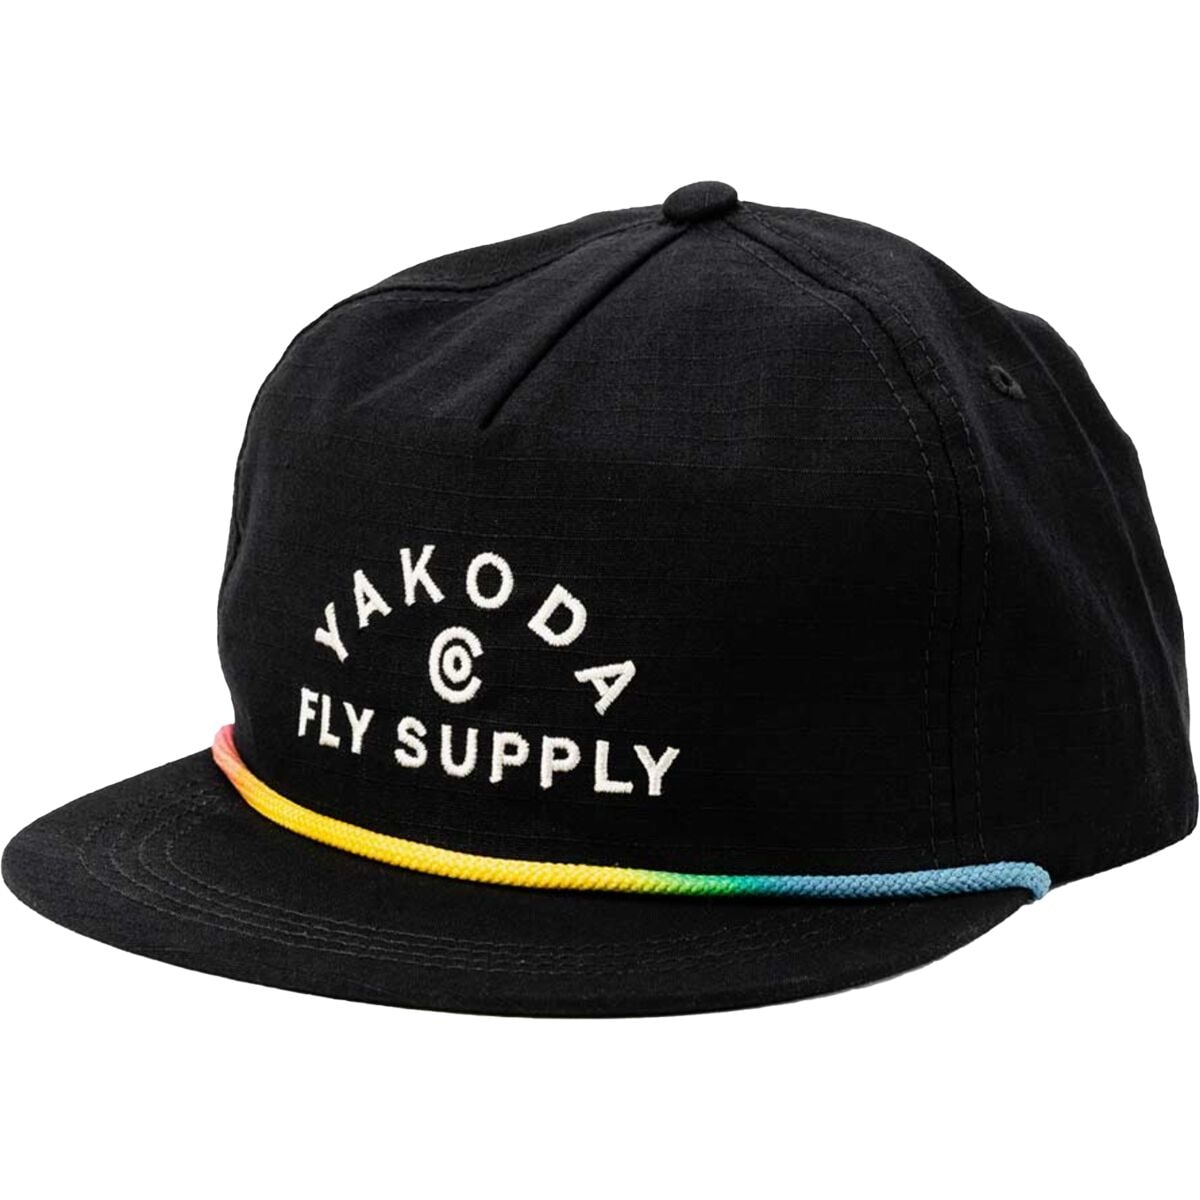 Yakoda Supply Shop Hat